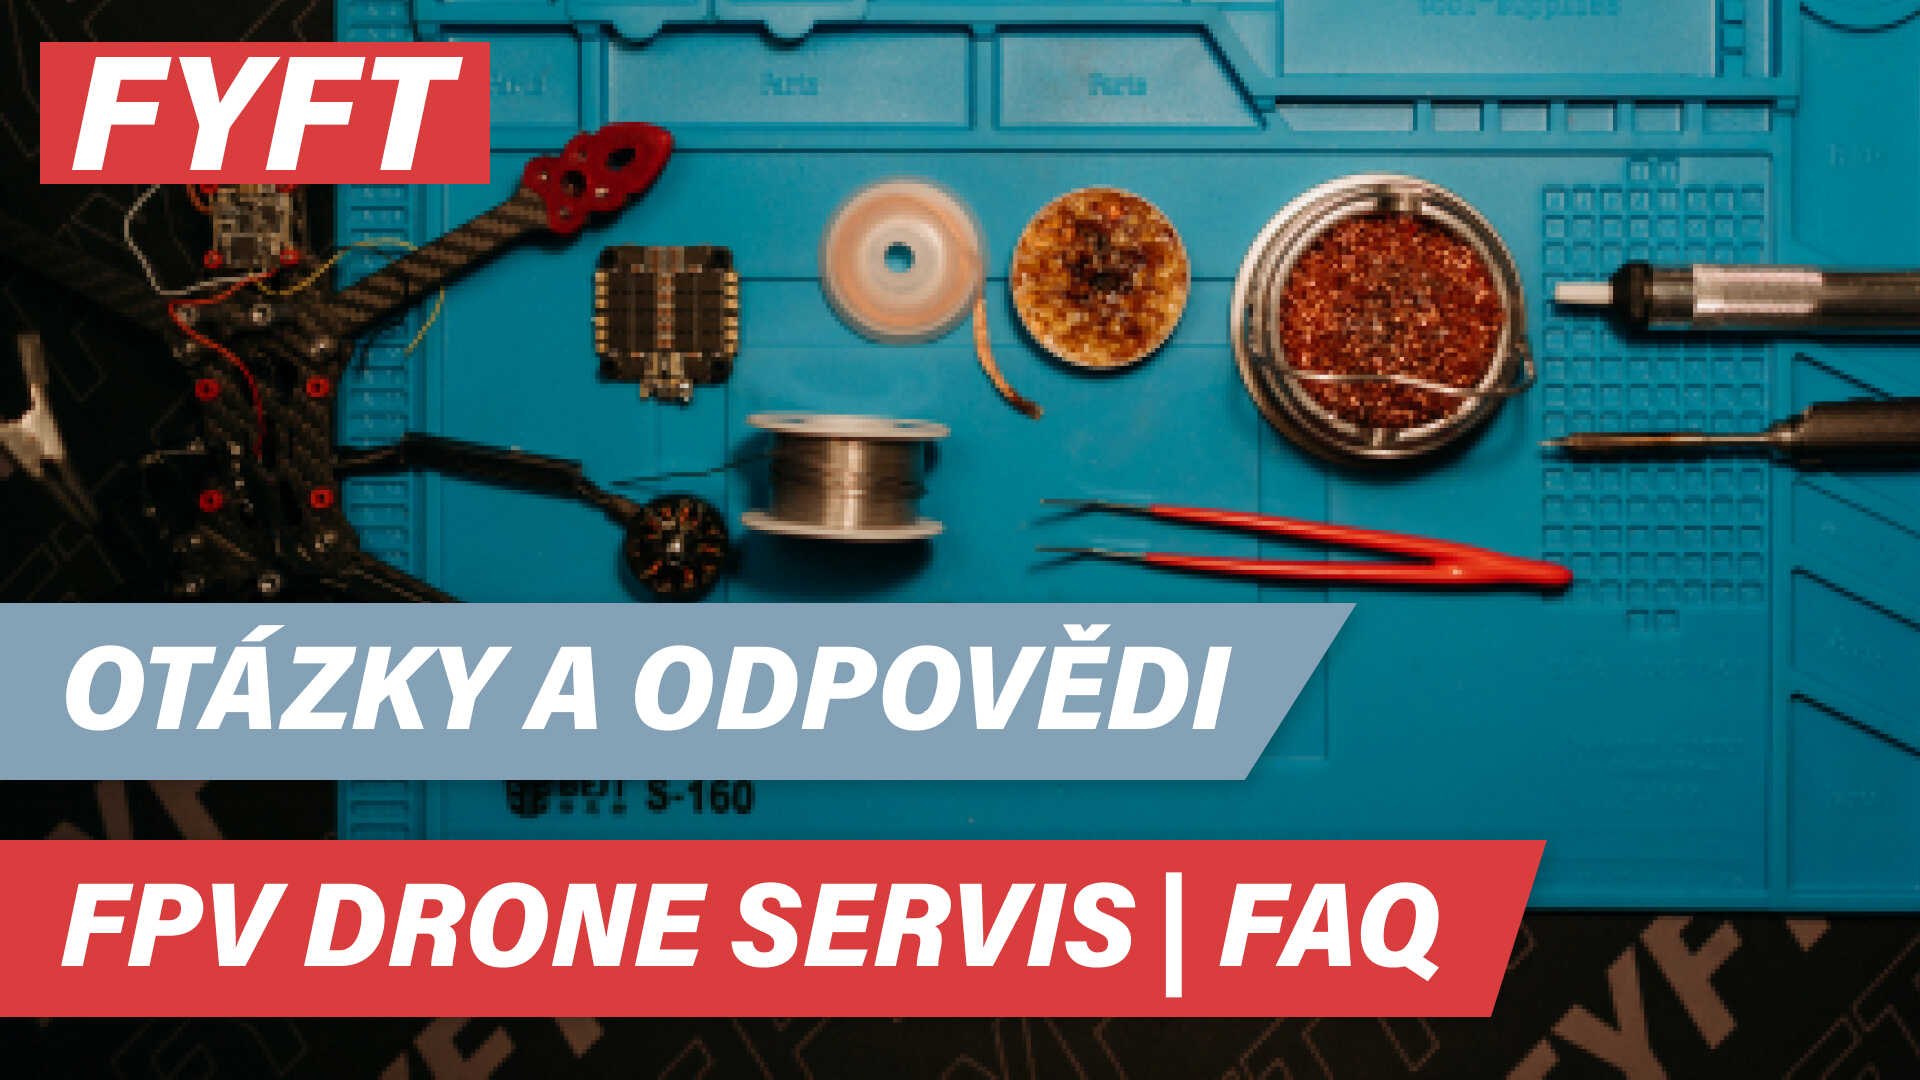 Jak řešit servis a opravu dronu? | FAQ